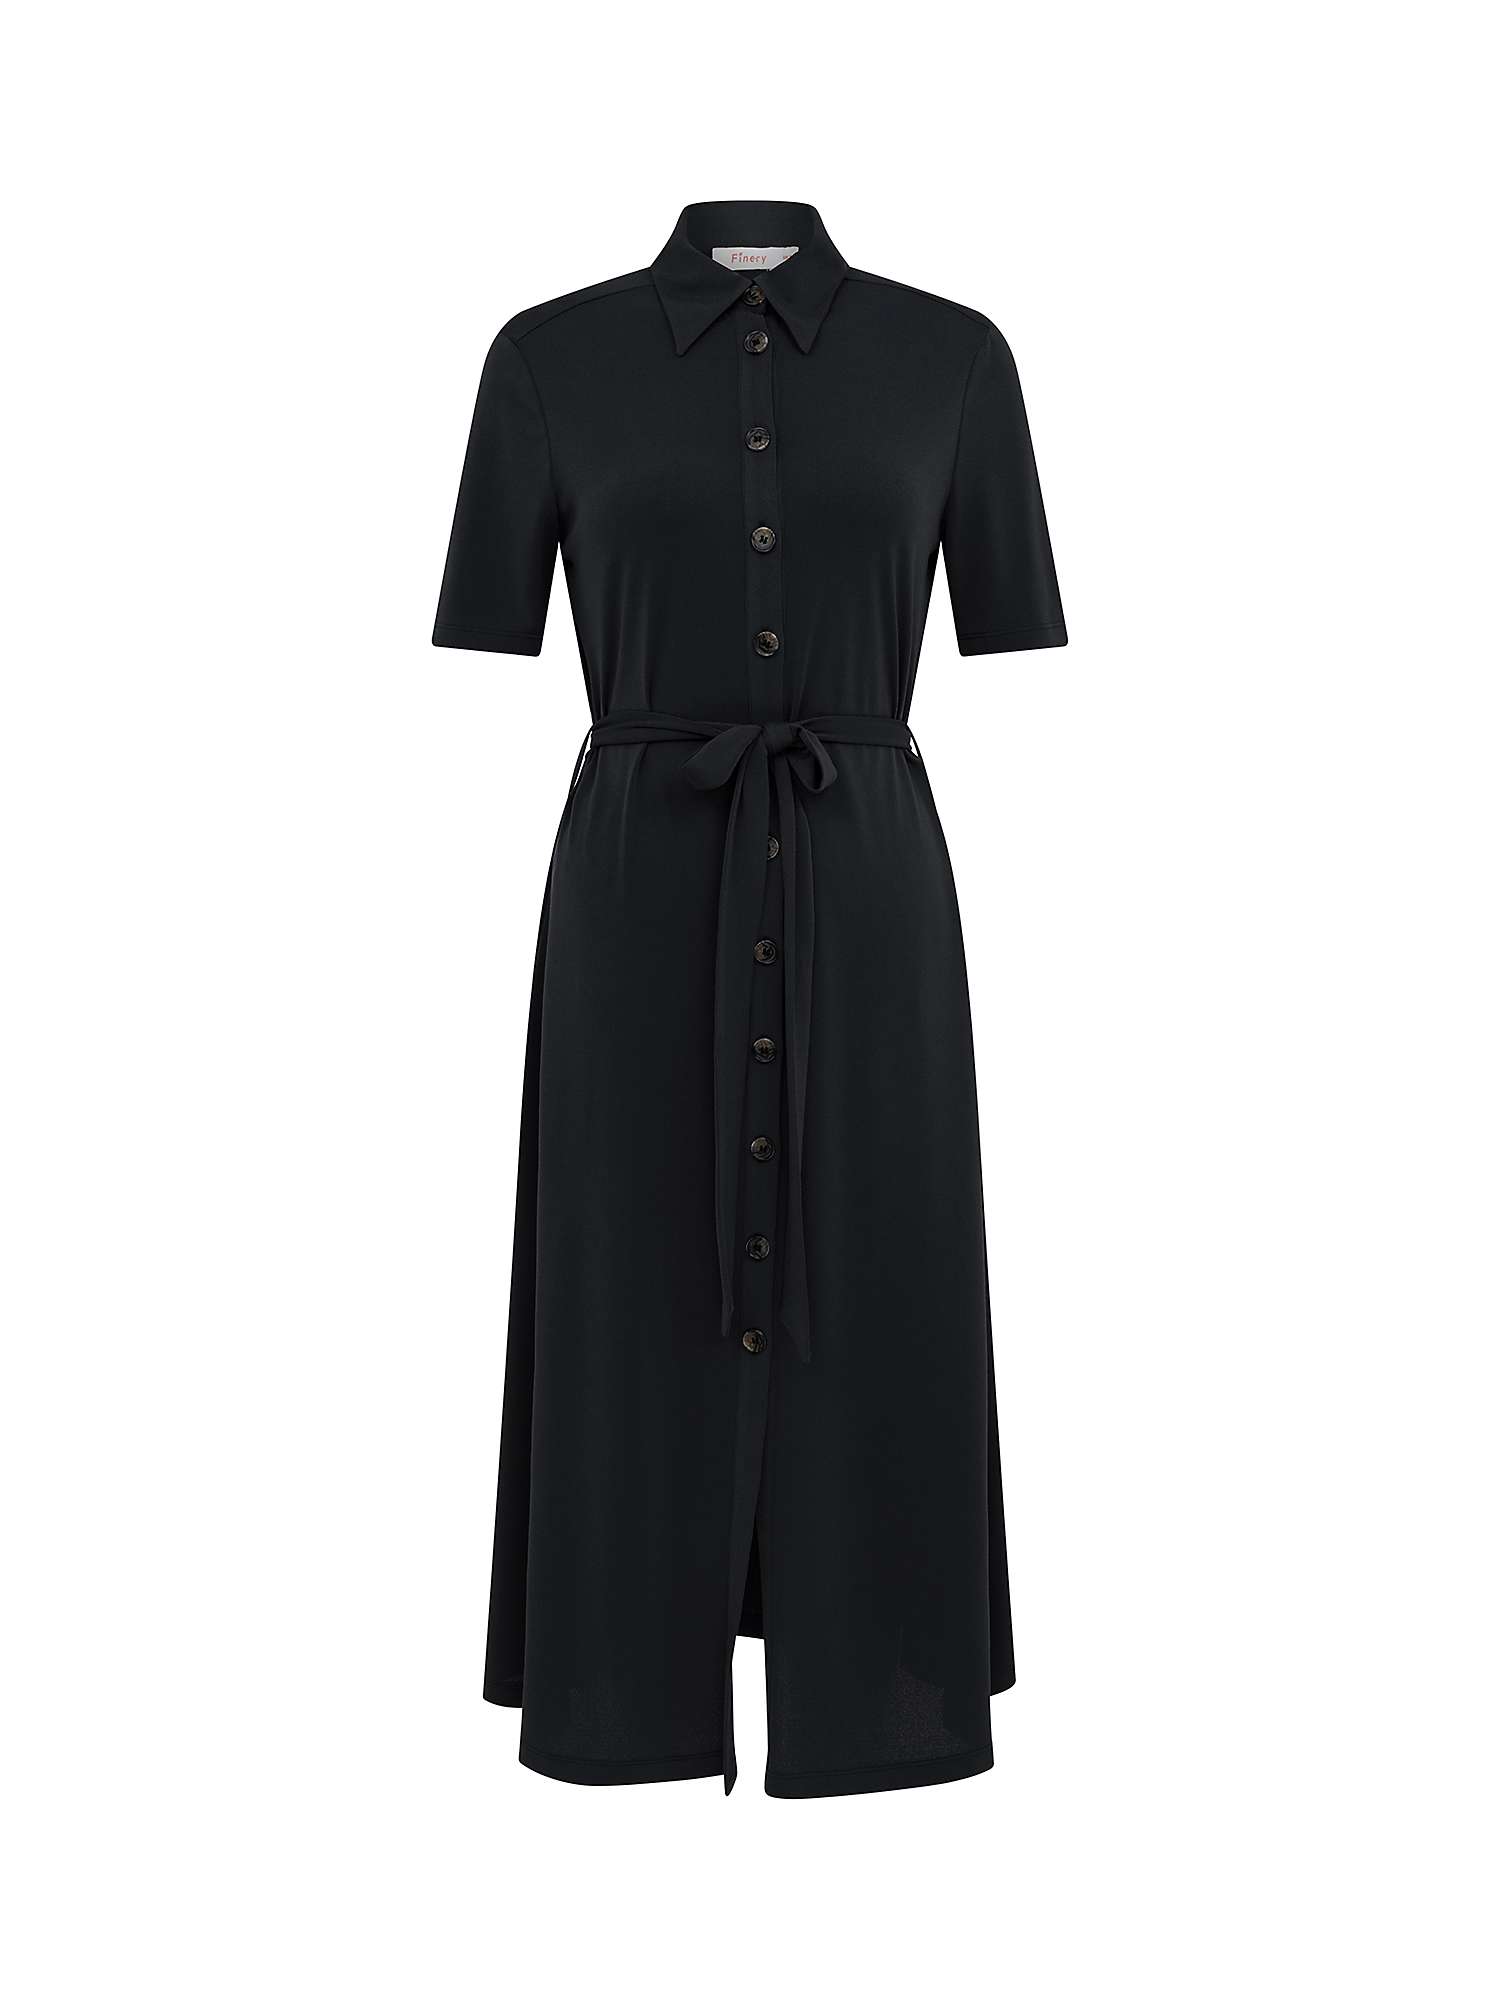 Finery Maddie Crepe Shirt Dress, Black at John Lewis & Partners